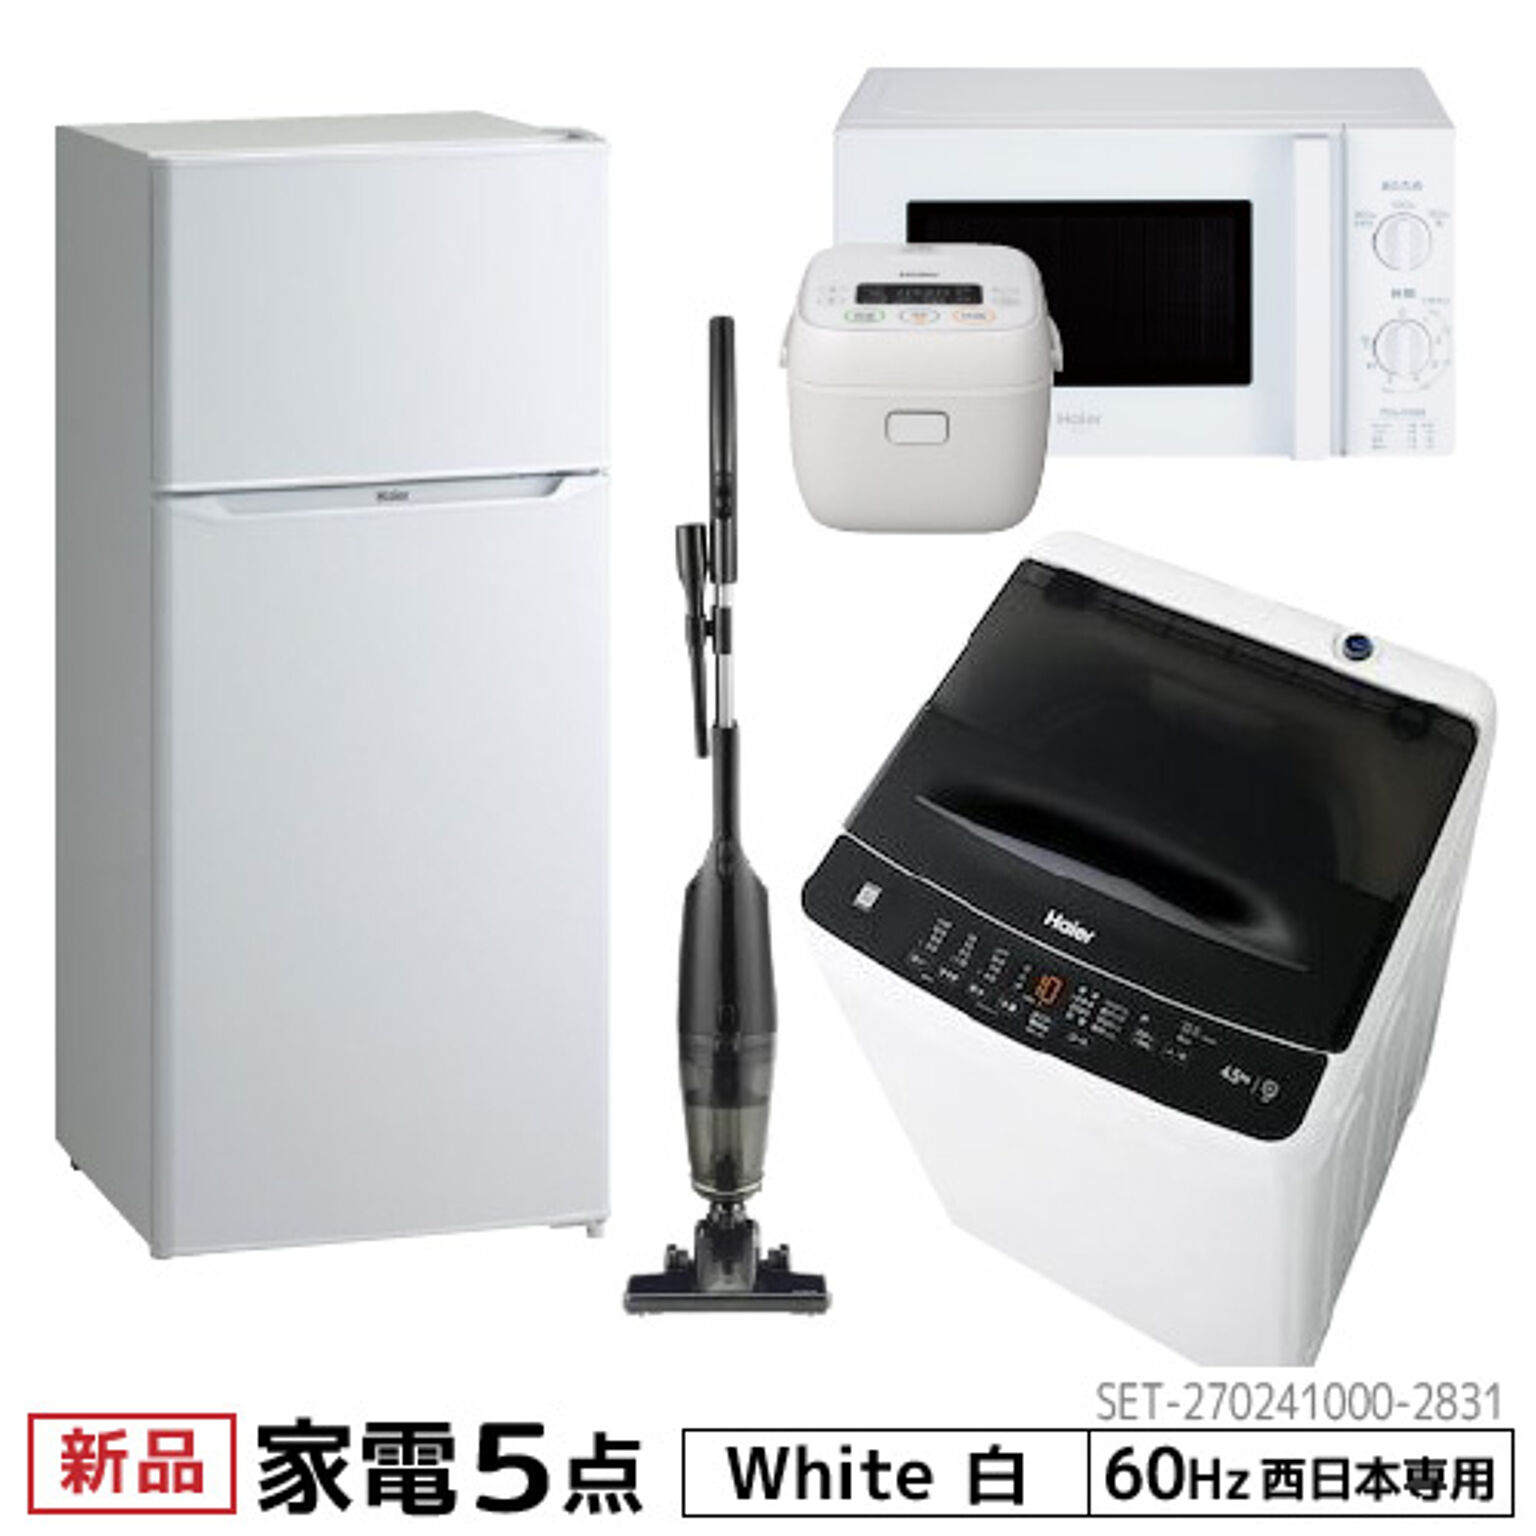 Haier 一人暮らし用 5点セット 2ドア冷蔵庫 ホワイト, 130L 全自動洗濯機 4.5kg 電子レンジ ホワイト,17L 炊飯器 3合 クリーナー 西日本地域専用